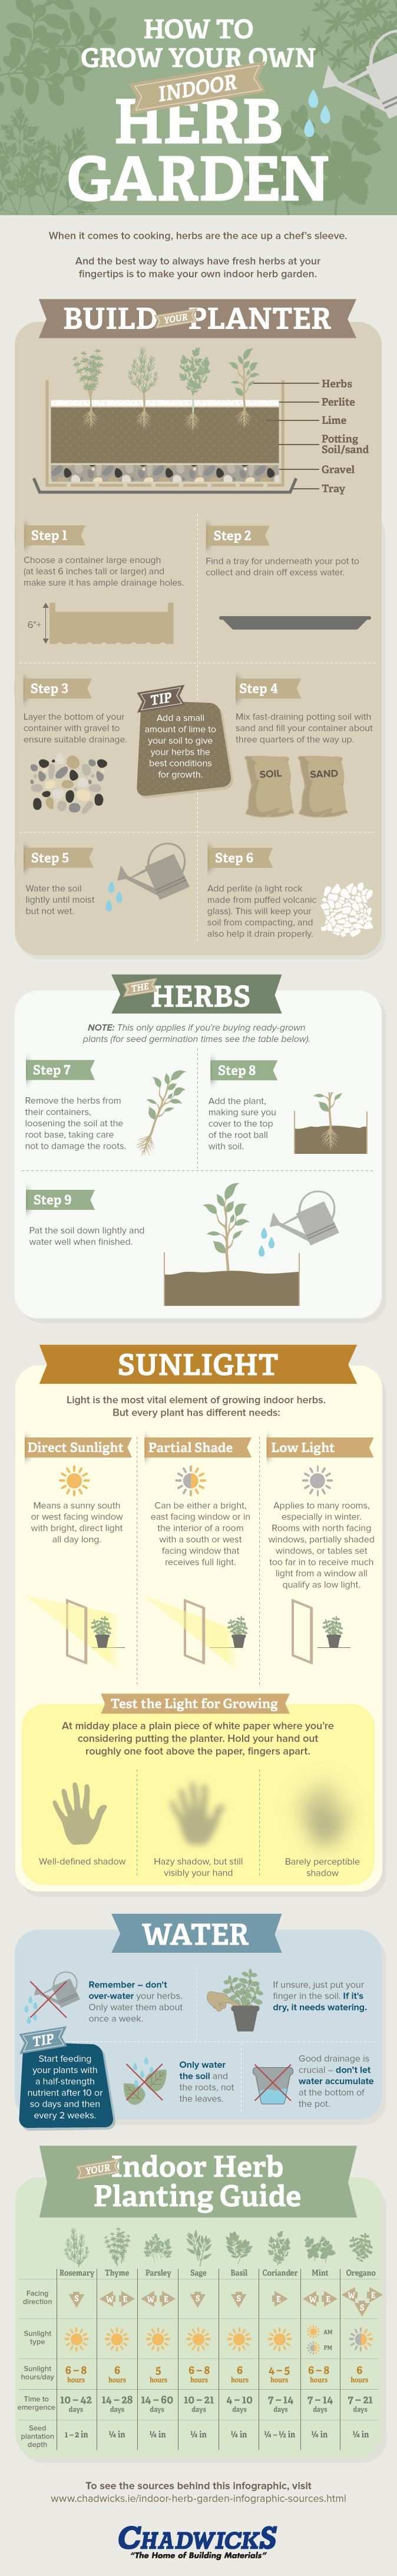 How to Grow Your Own Indoor Herb Garden #infographic